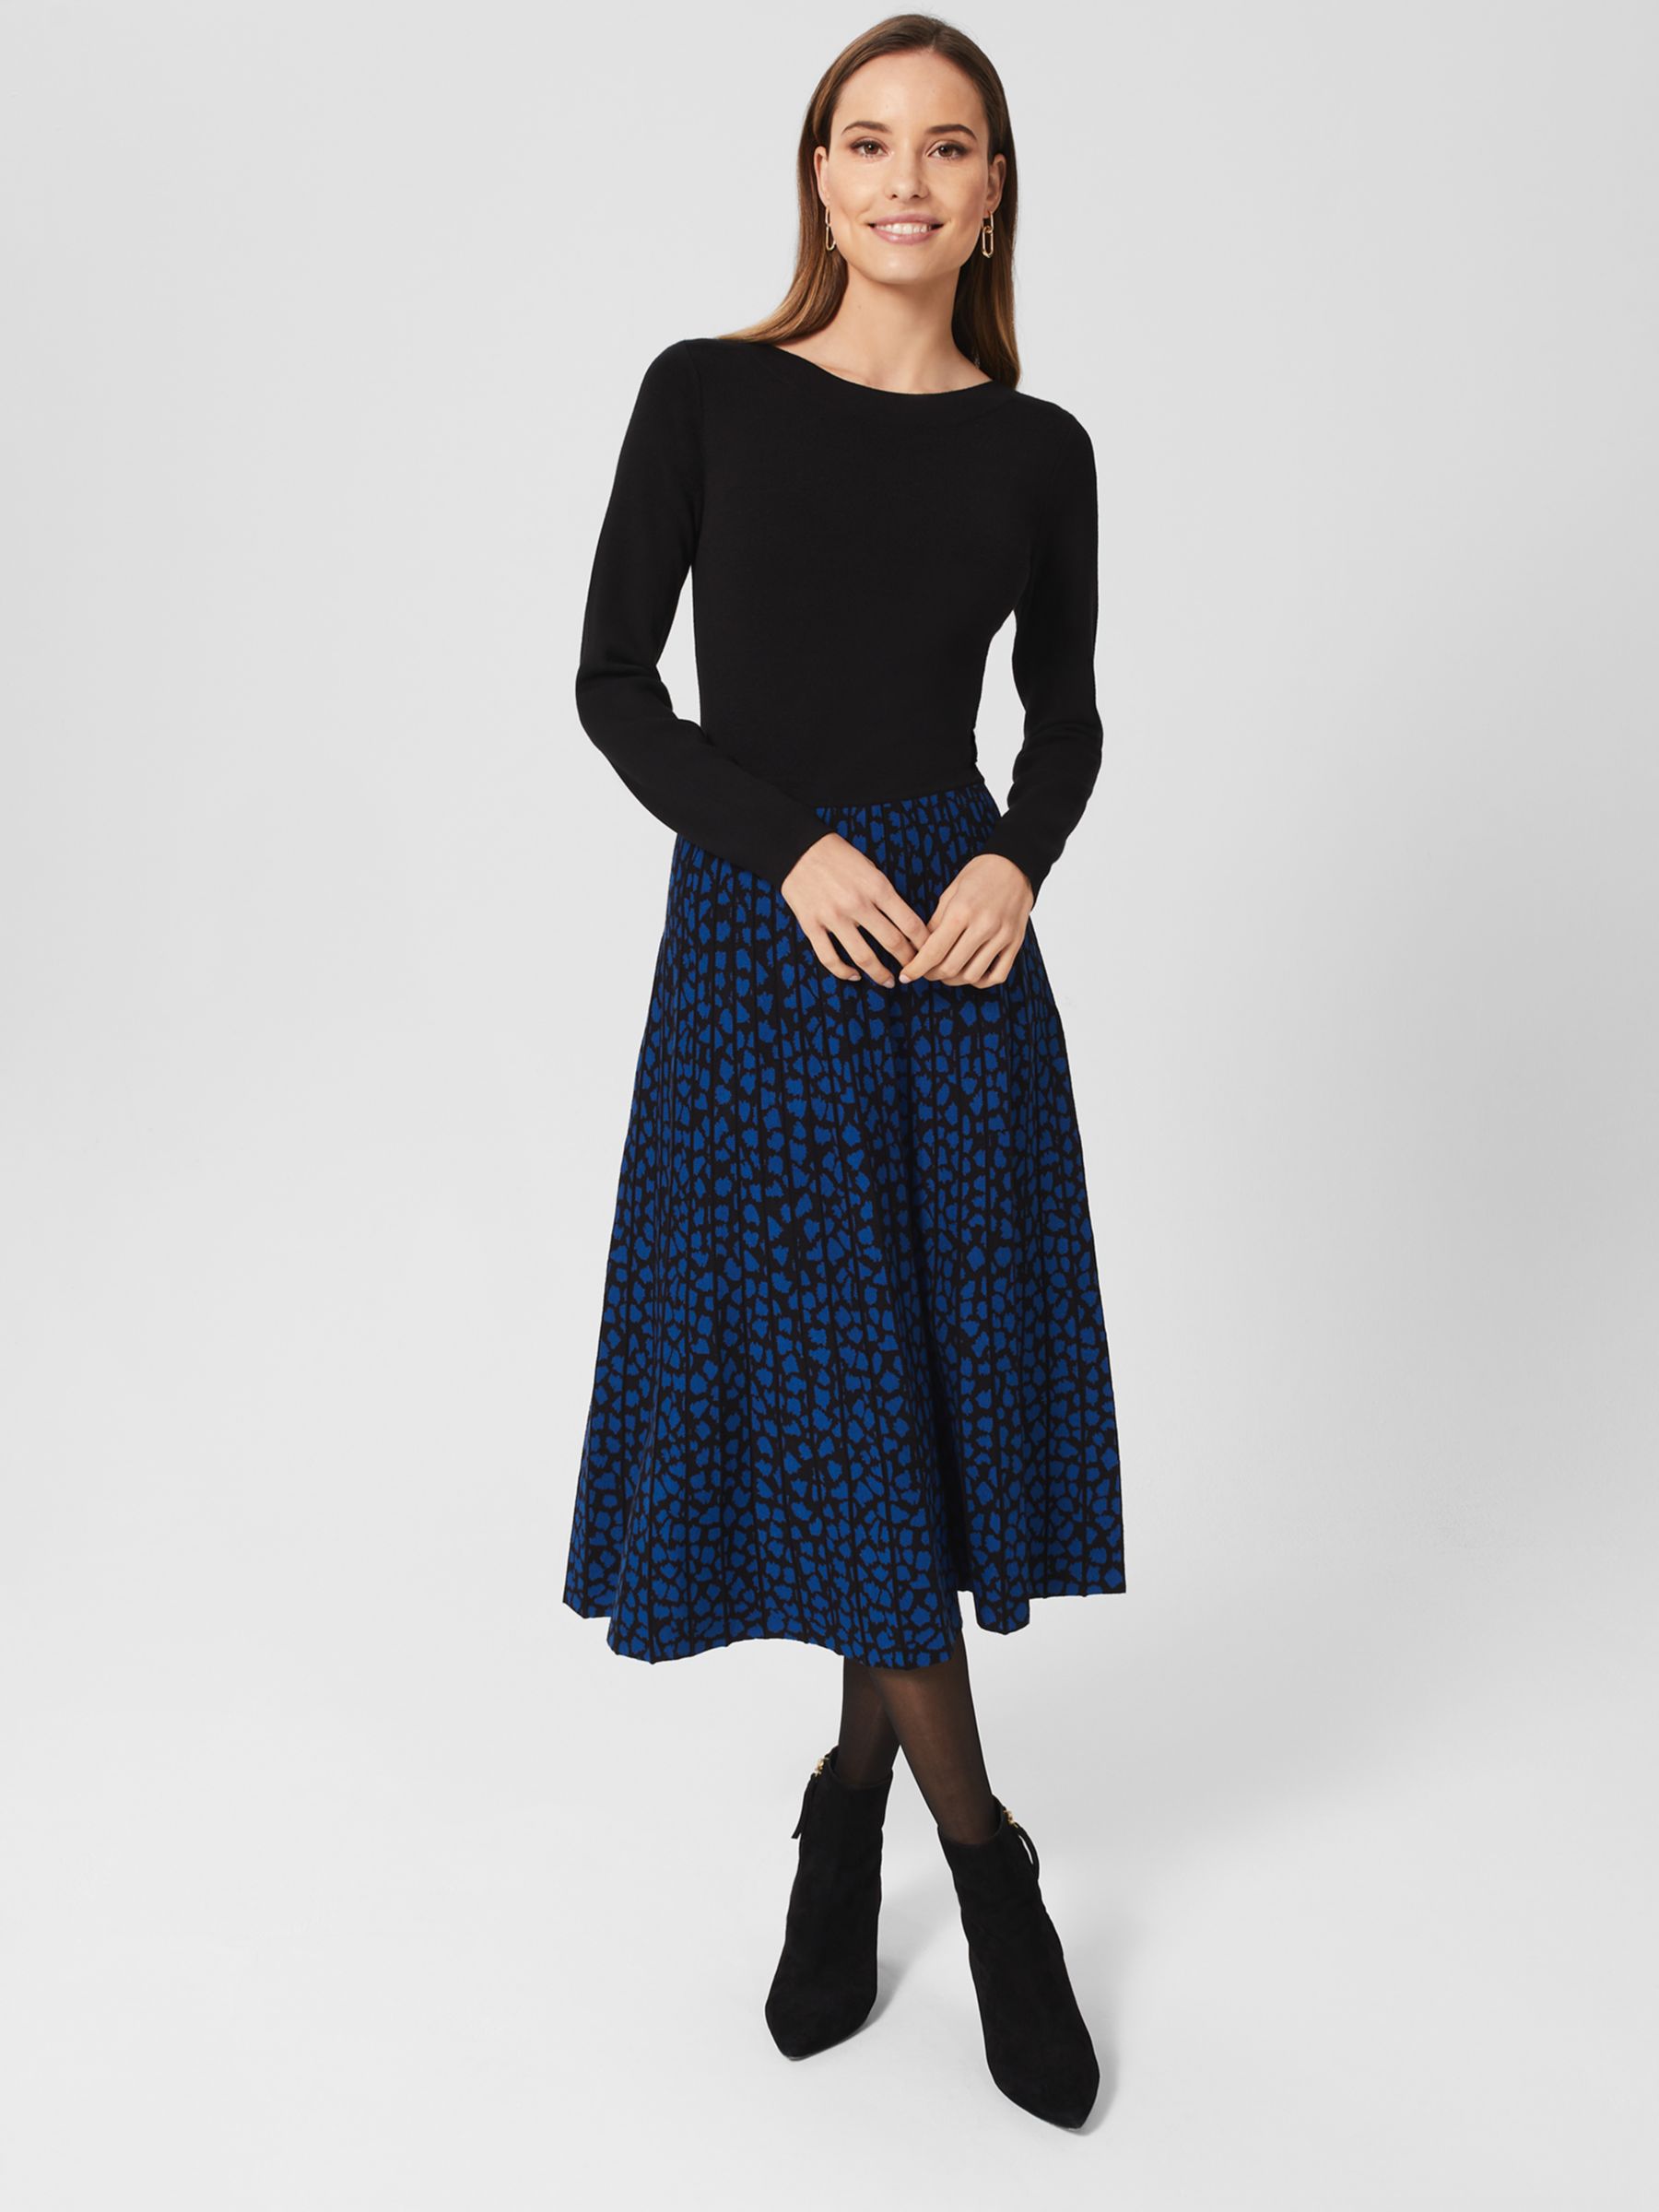 Hobbs Petite Elena Knit Midi Dress, Black/Blue, 16